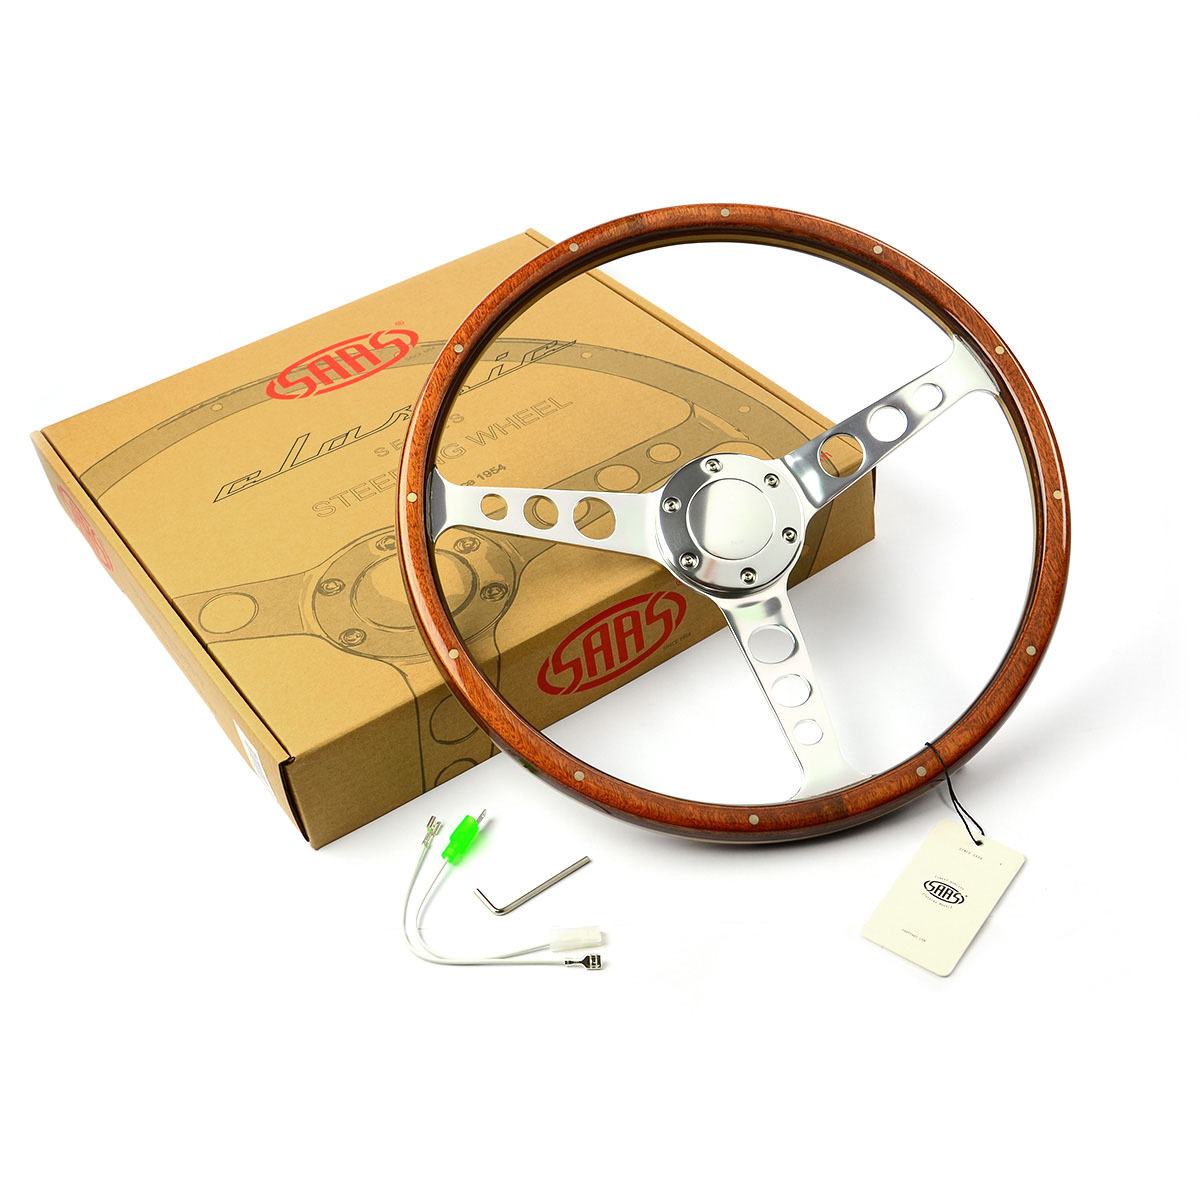 Steering Wheel Wood 15" ADR Classic Polished Alloy Holes + Rivet